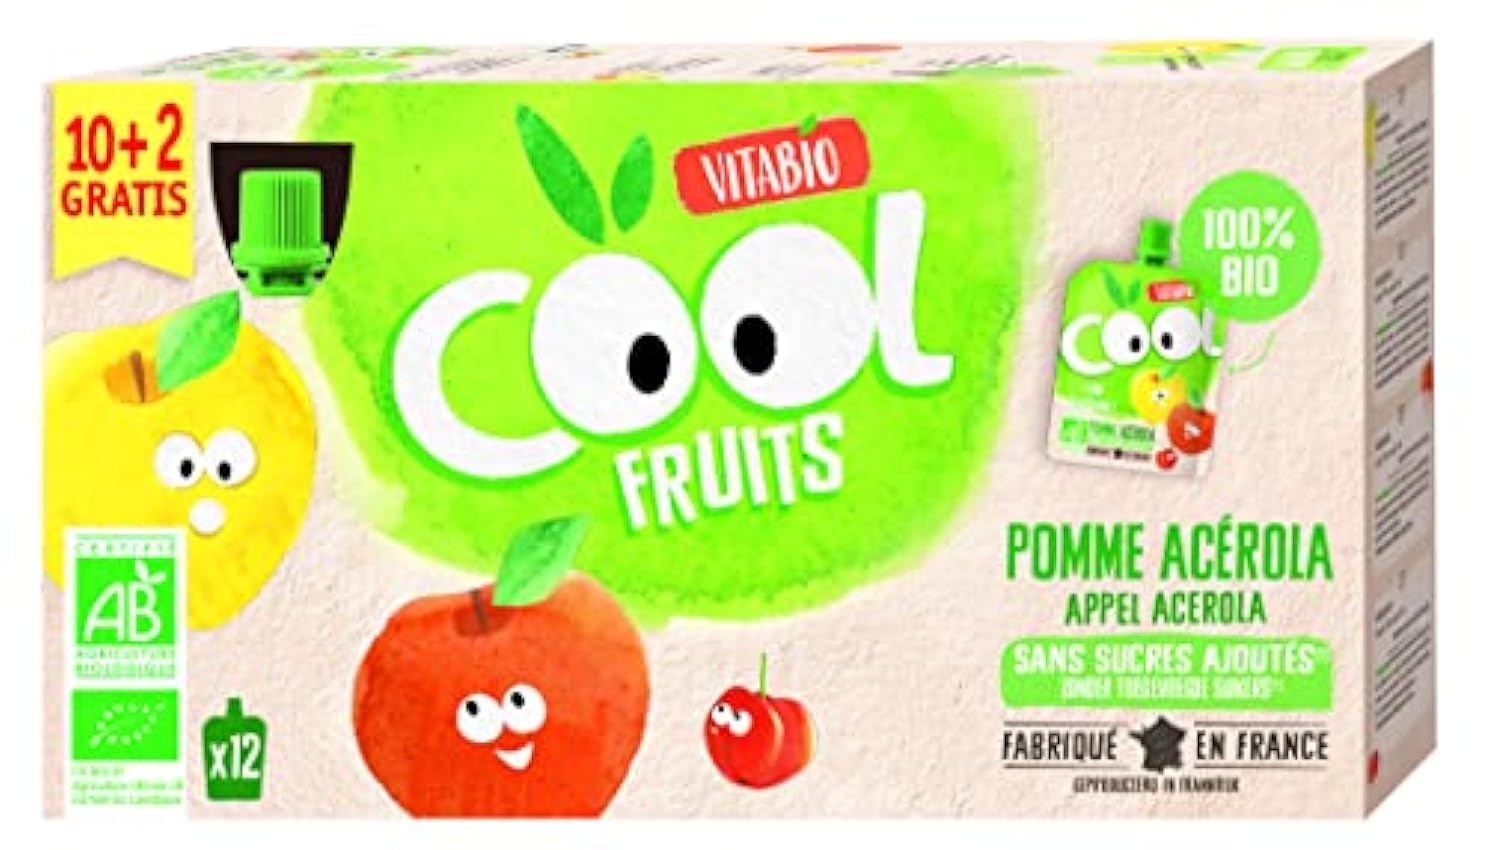 Vitabio - Bolsita De Fruta Bio - Cool Fruit - Manzana - 90G - Pack Familiar 10+2 Gratis gSpgl6NZ